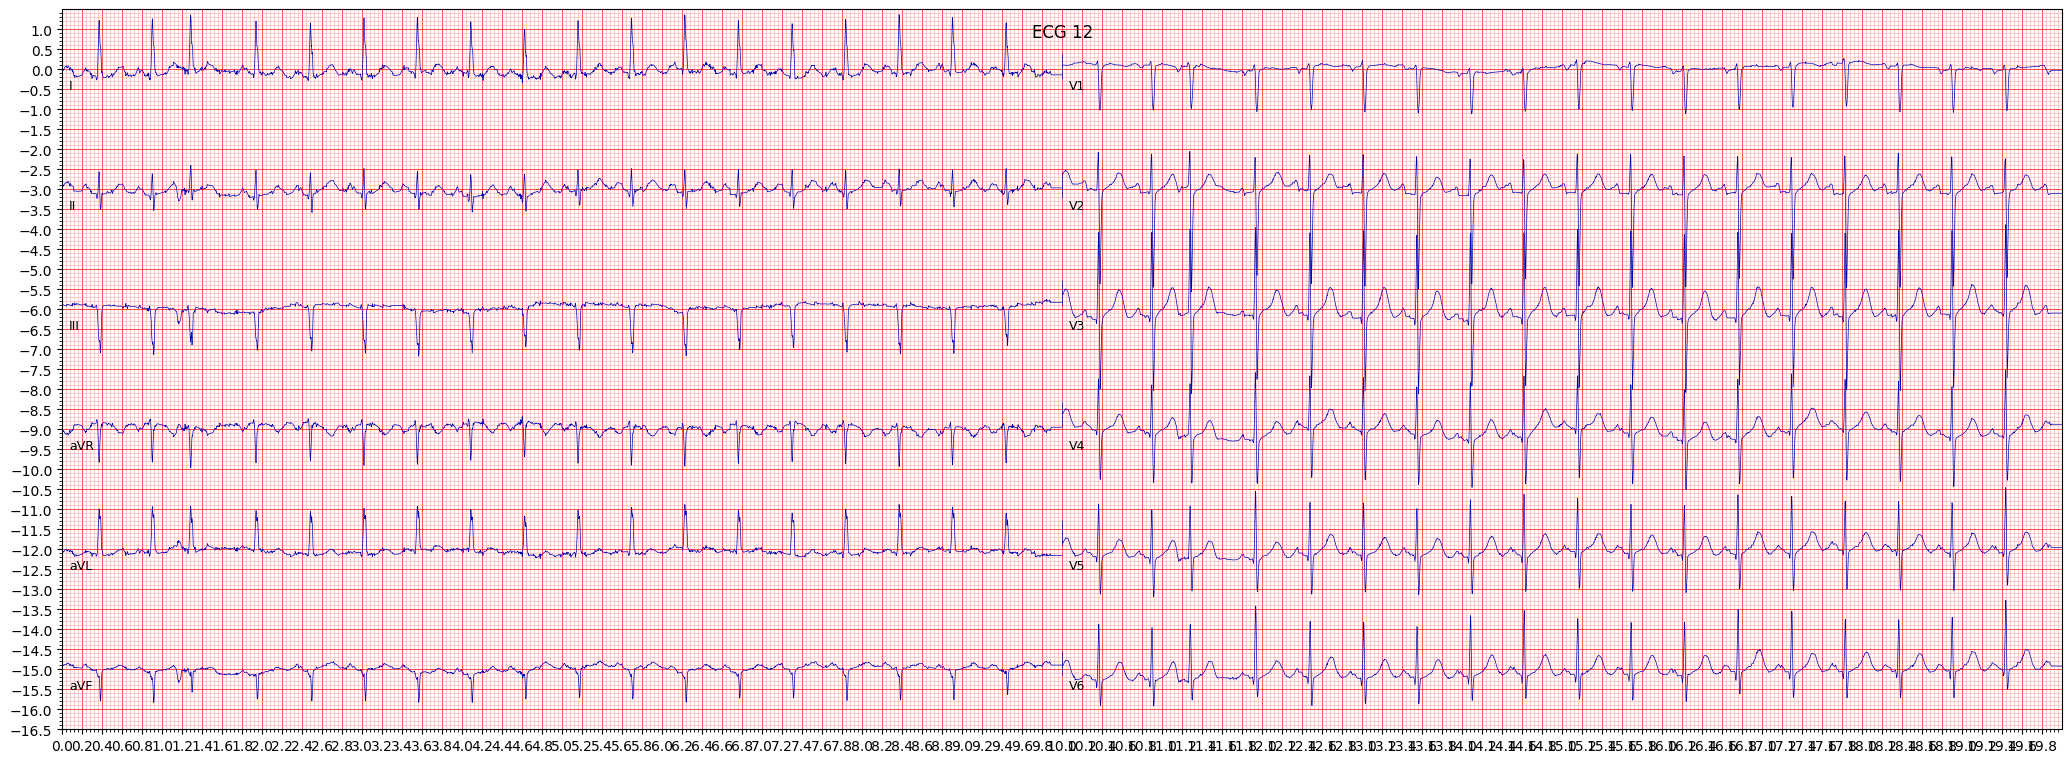 inferior myocardial infarction (IMI) example 2363